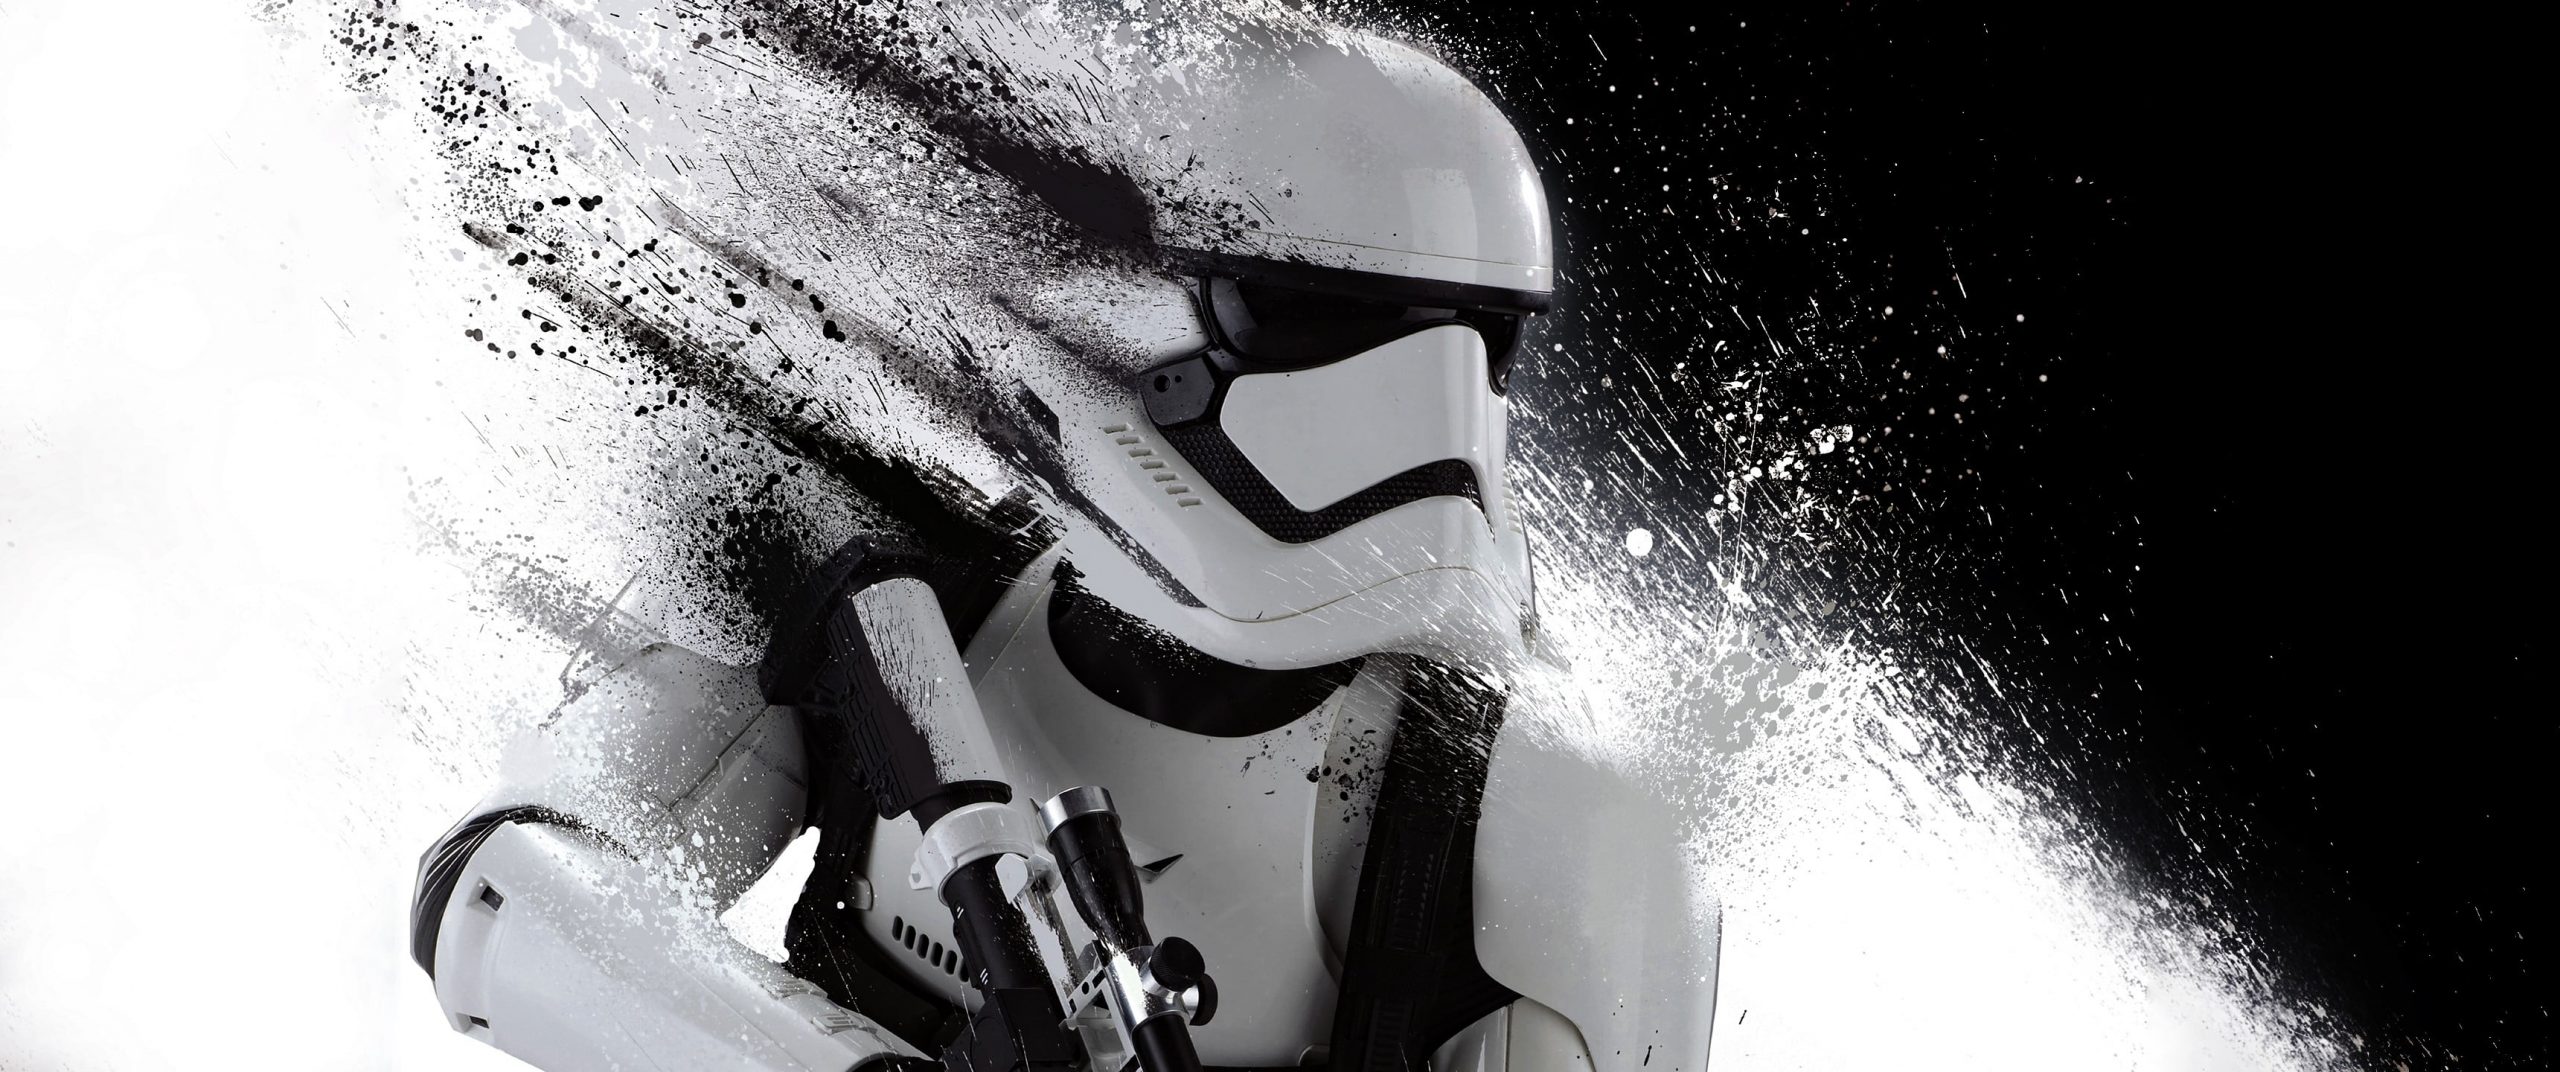 Star Wars Stormtrooper wallpaper Star Wars: The Force Awakens wallpaper